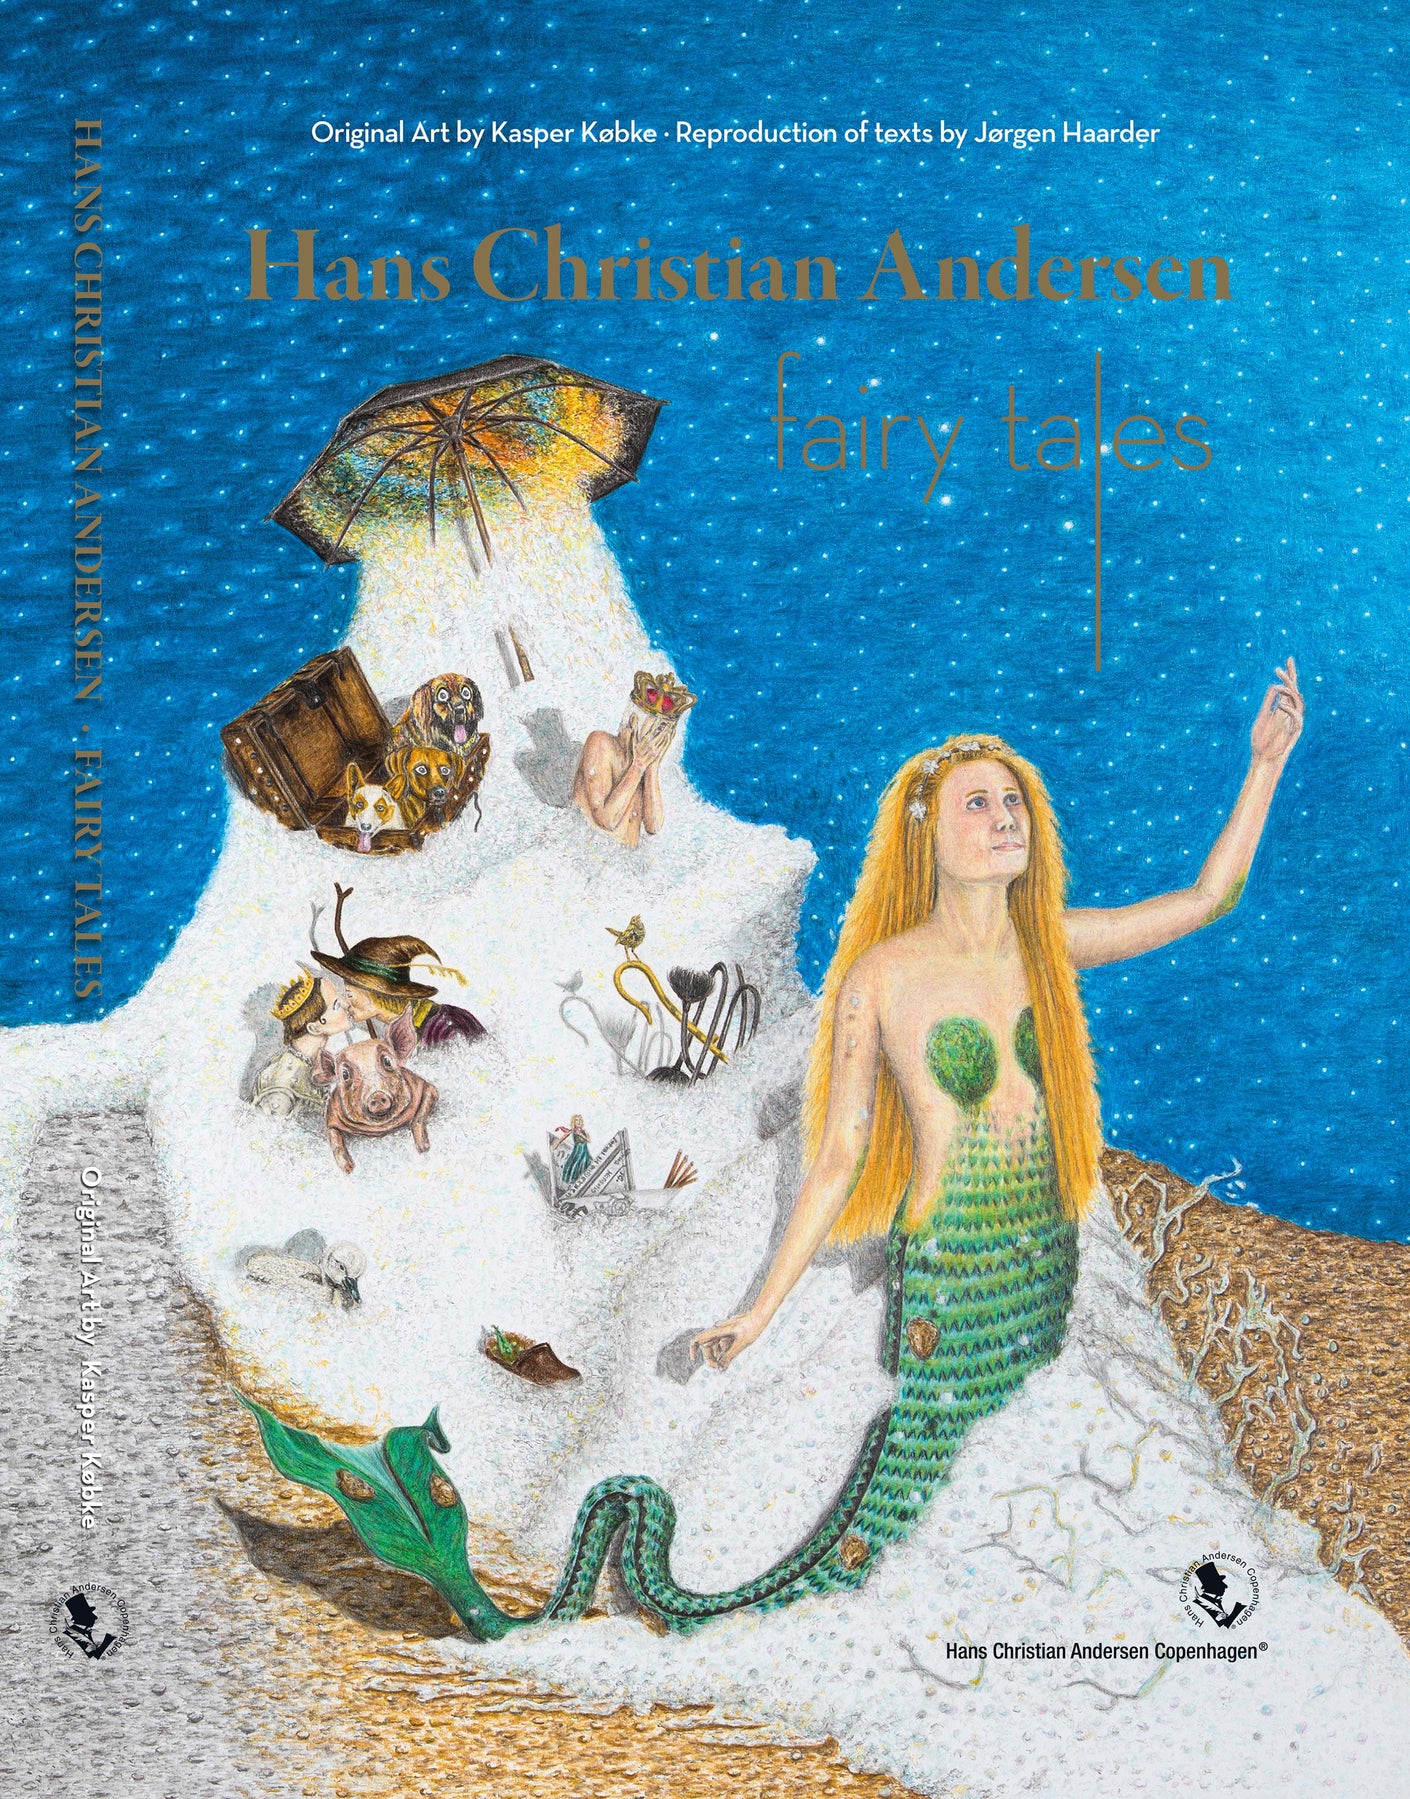 Hans Christian Andersen (April 2, 1805 – August 4, 1875)